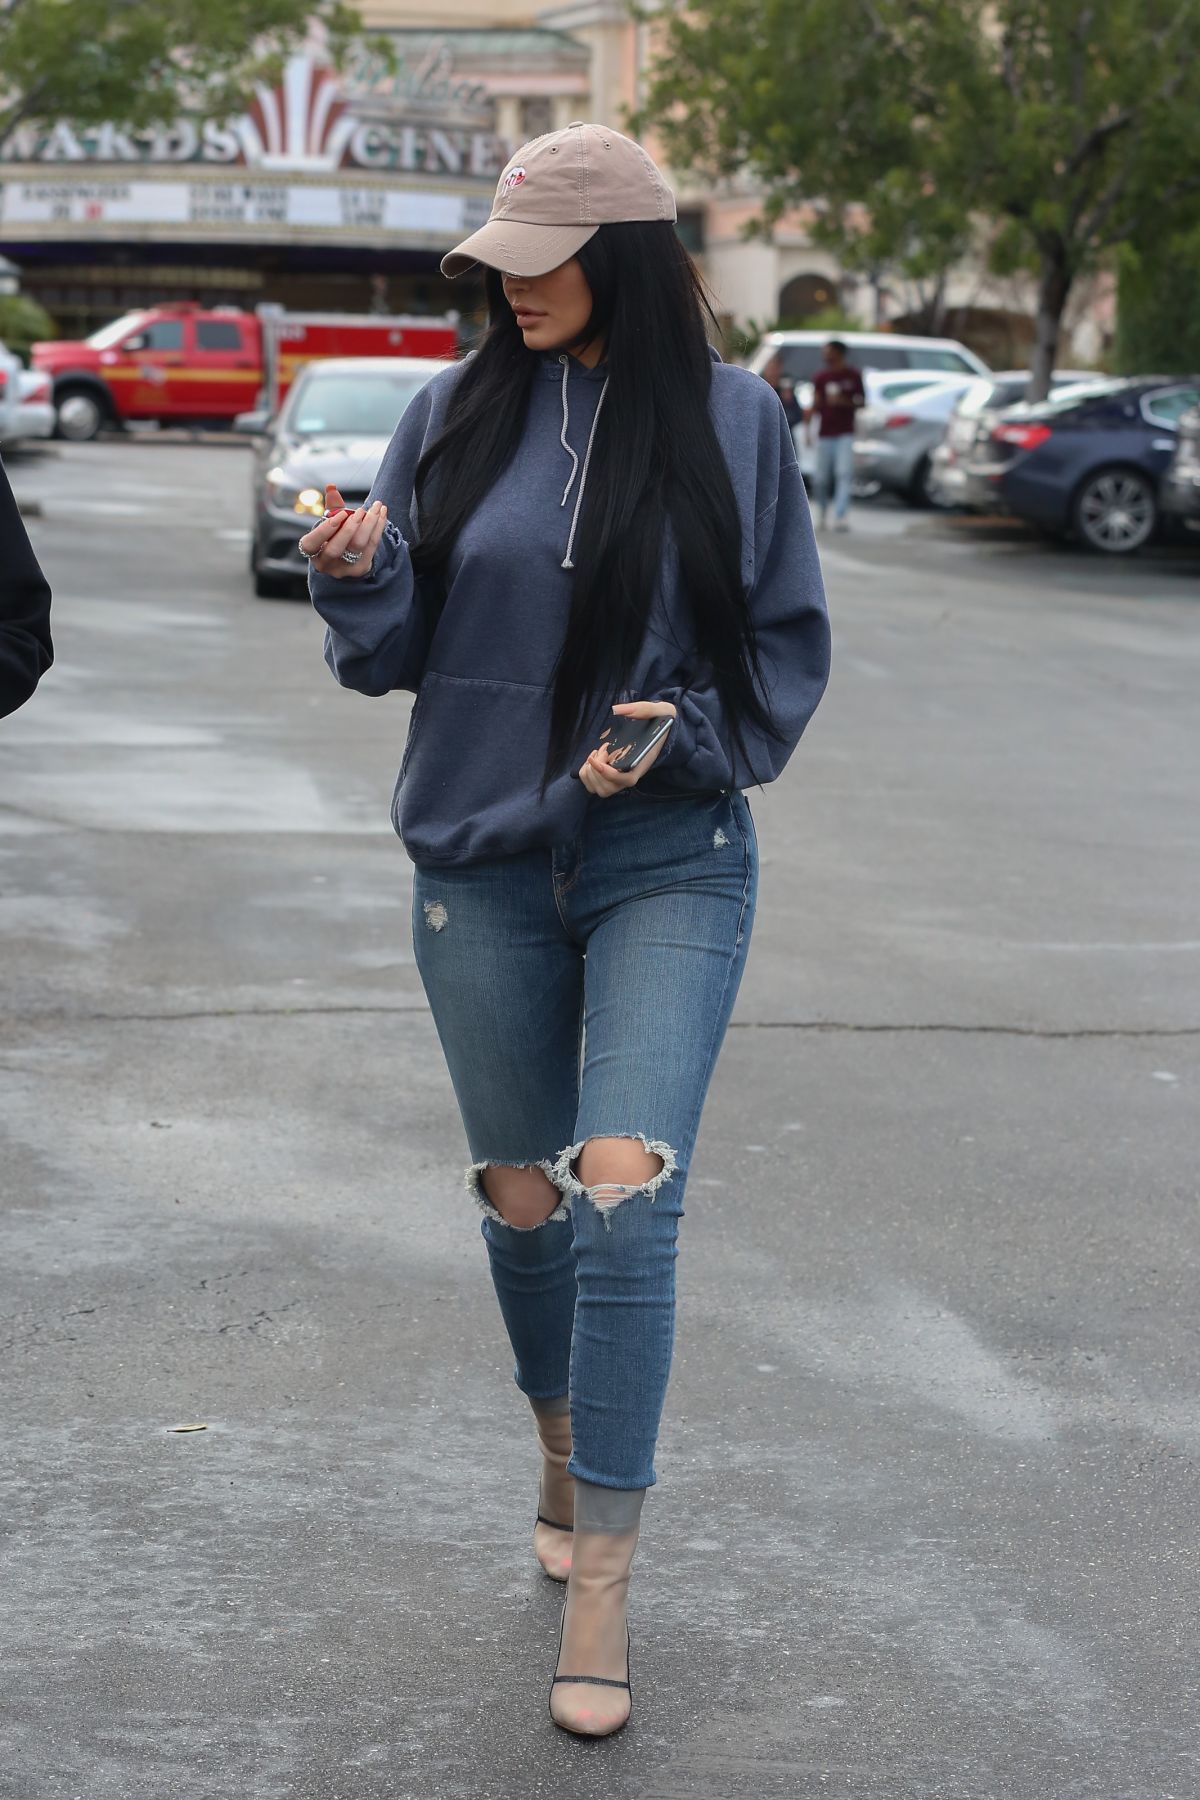 Kylie Jenner Calabasas June 7, 2018 – Star Style